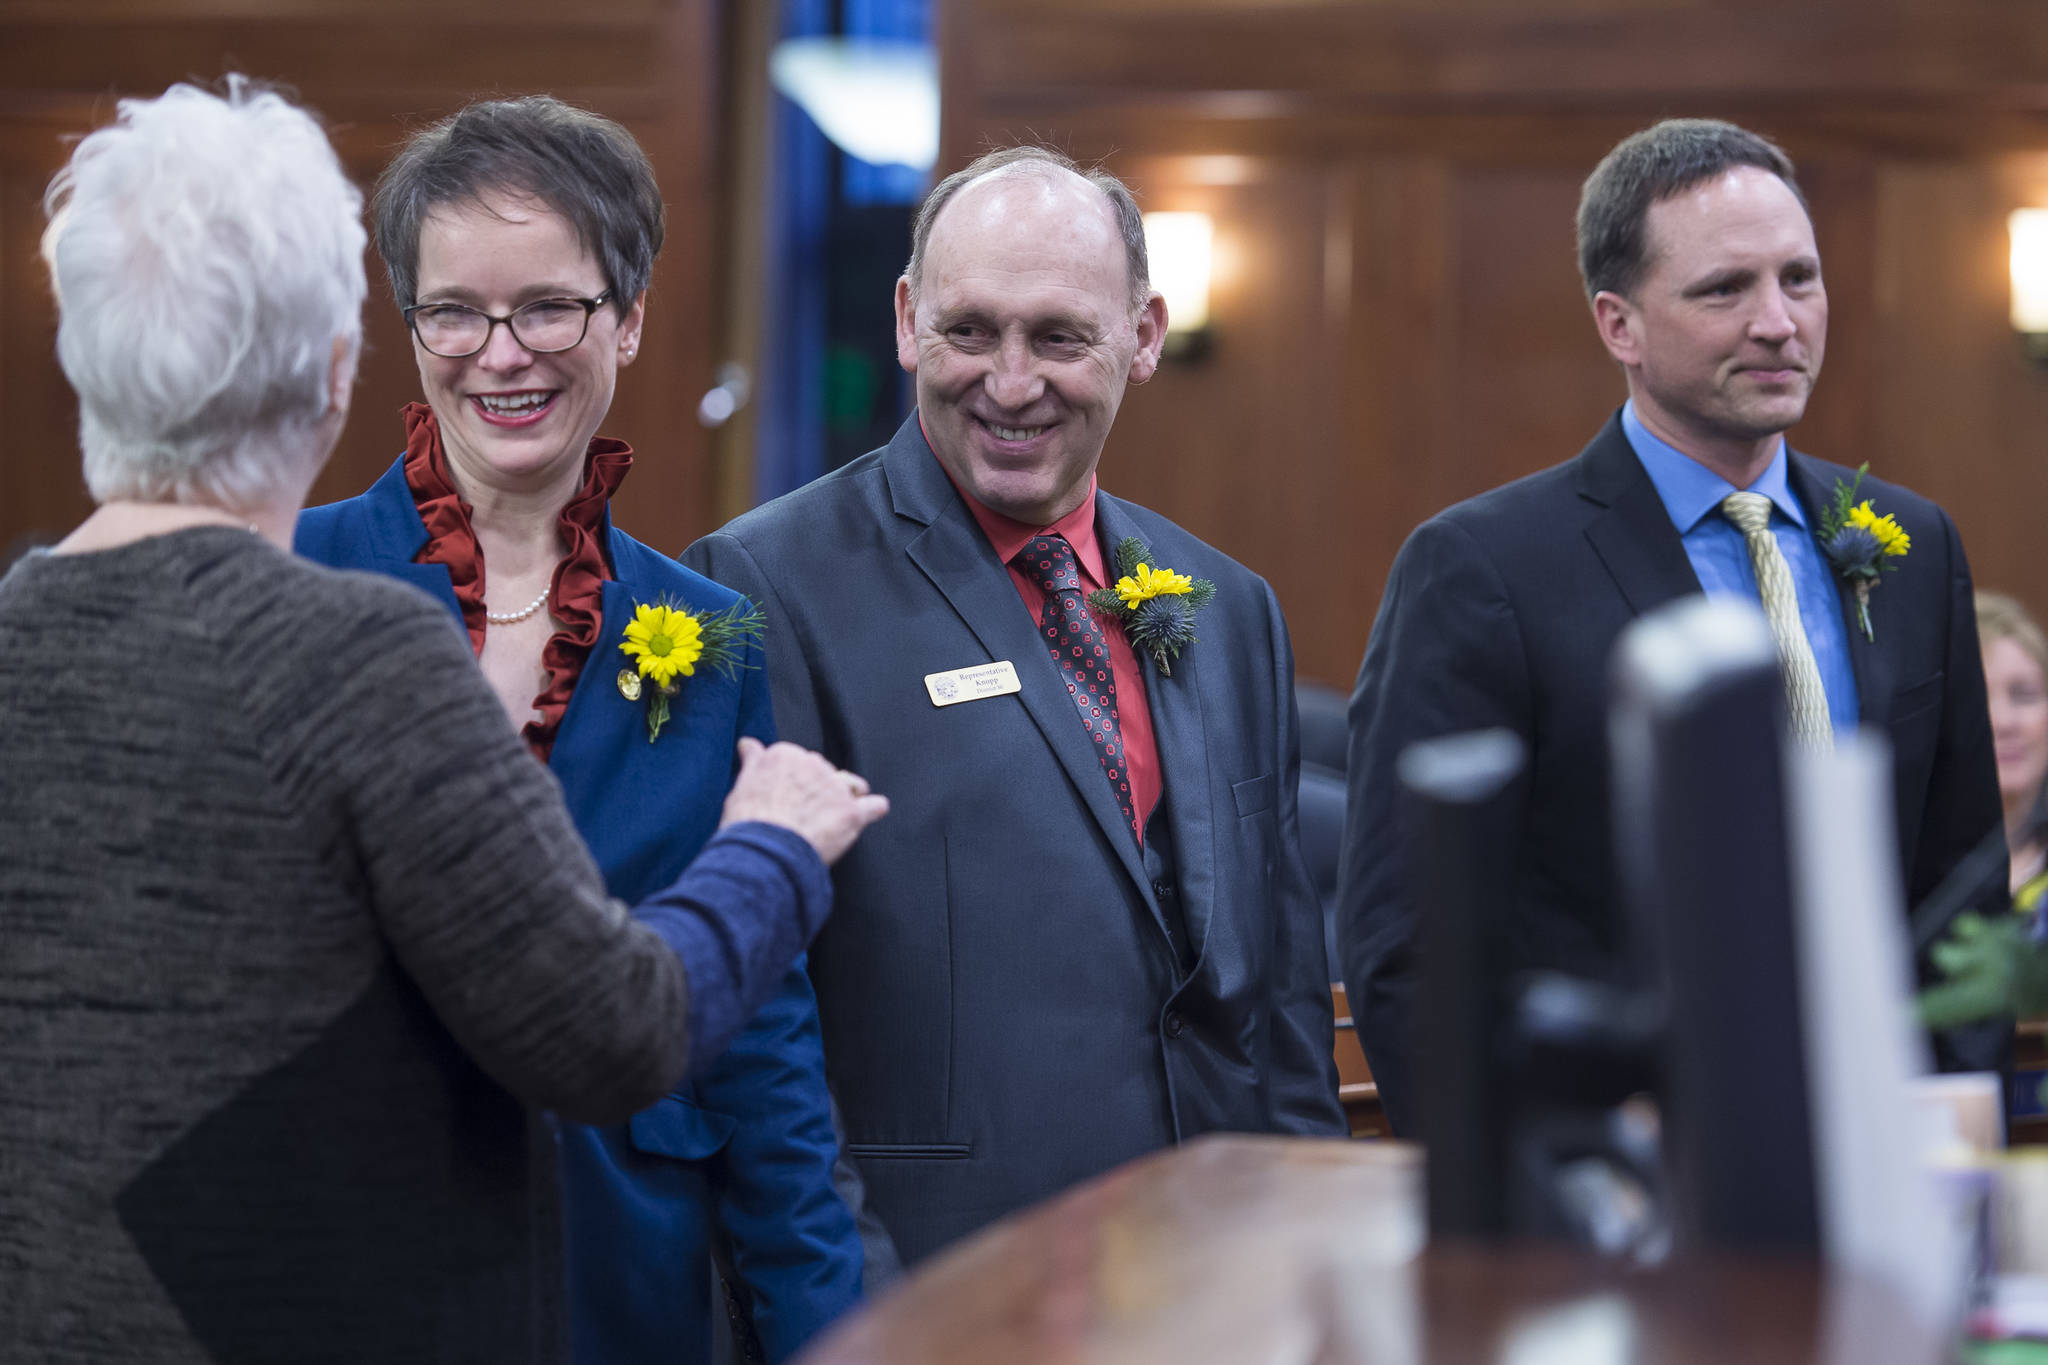 Rep. Louise Stutes, R-Kodiak, left, congratulates Rep. Sarah Vance, R-Homer, Rep. Gary Knopp, R-Kenai, and Rep. Ben Carpenter, R-Nikiski, right, after being sworn in on the opening day of the 31st Session of the Alaska Legislature on Tuesday, Jan. 15, 2019. (Michael Penn | Juneau Empire)